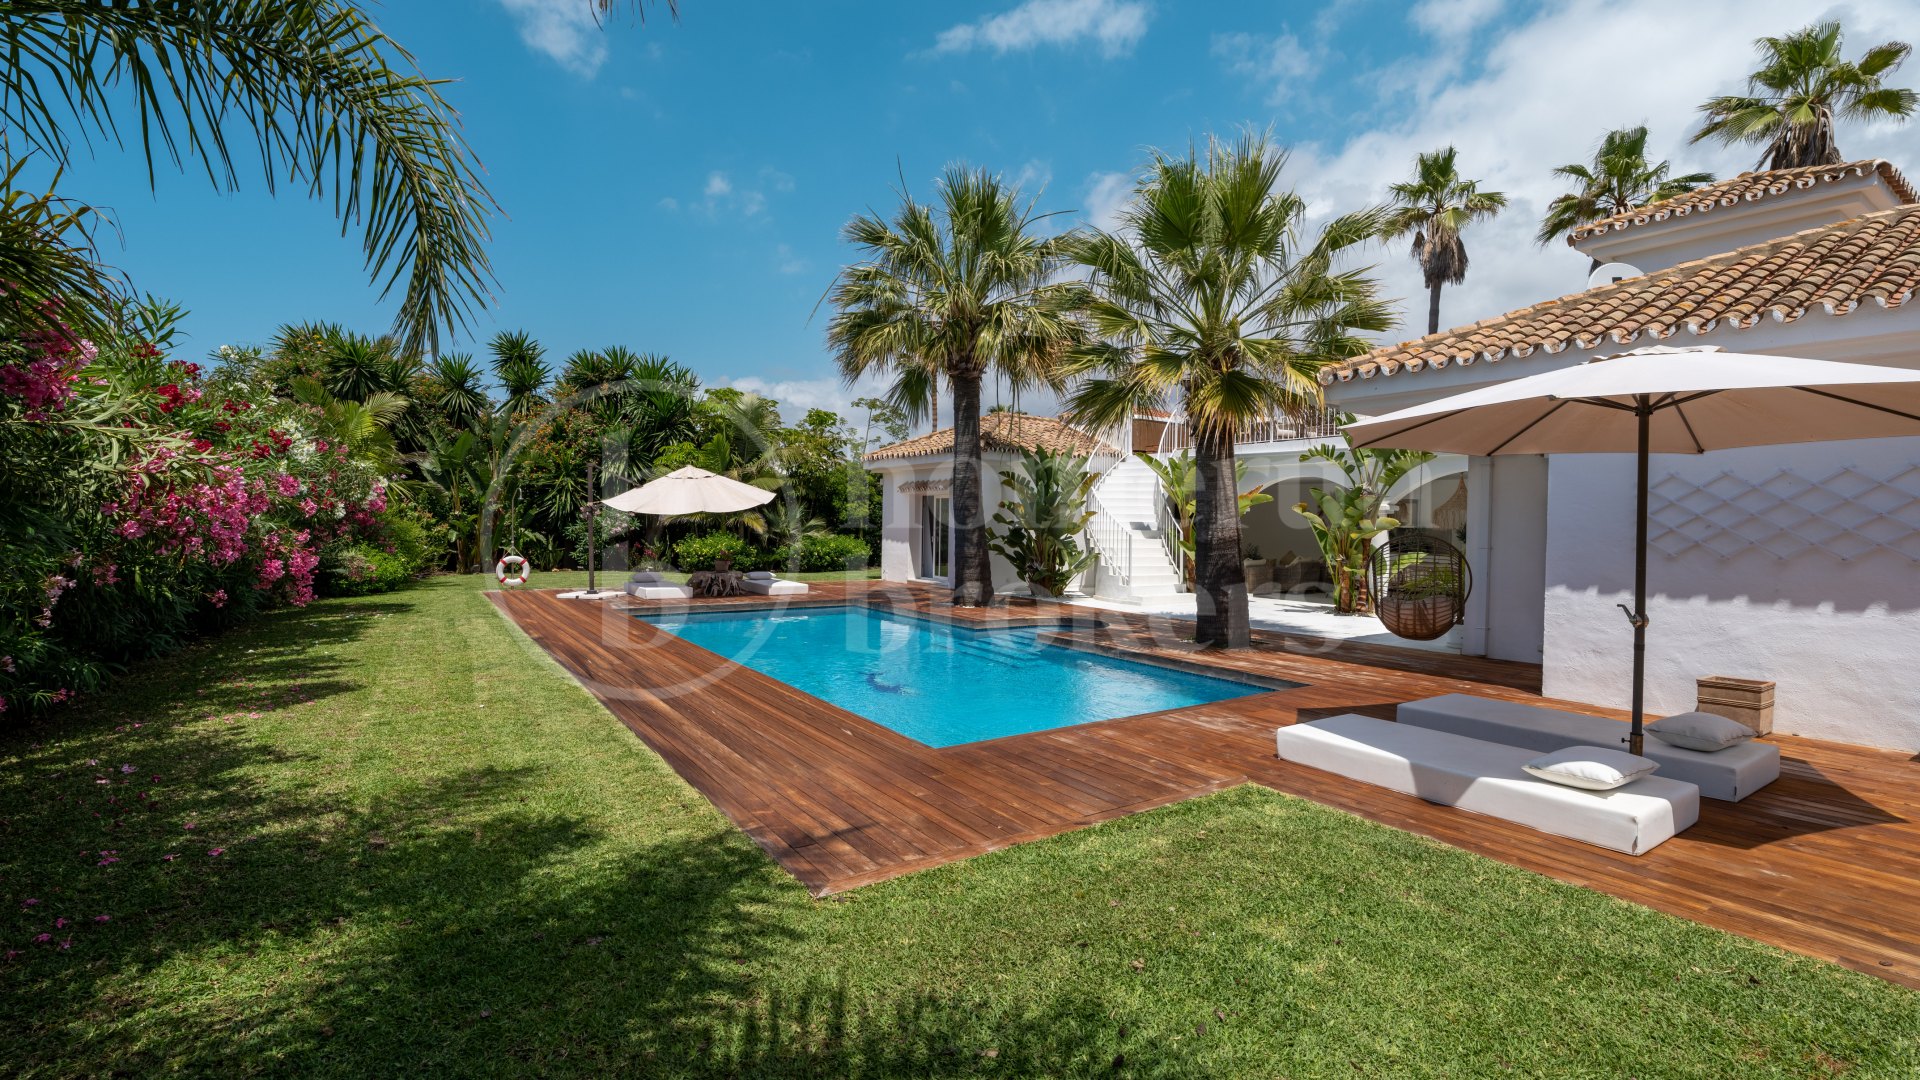 Villa Caribe - One Level Villa located Beachside Marbesa, East Marbella